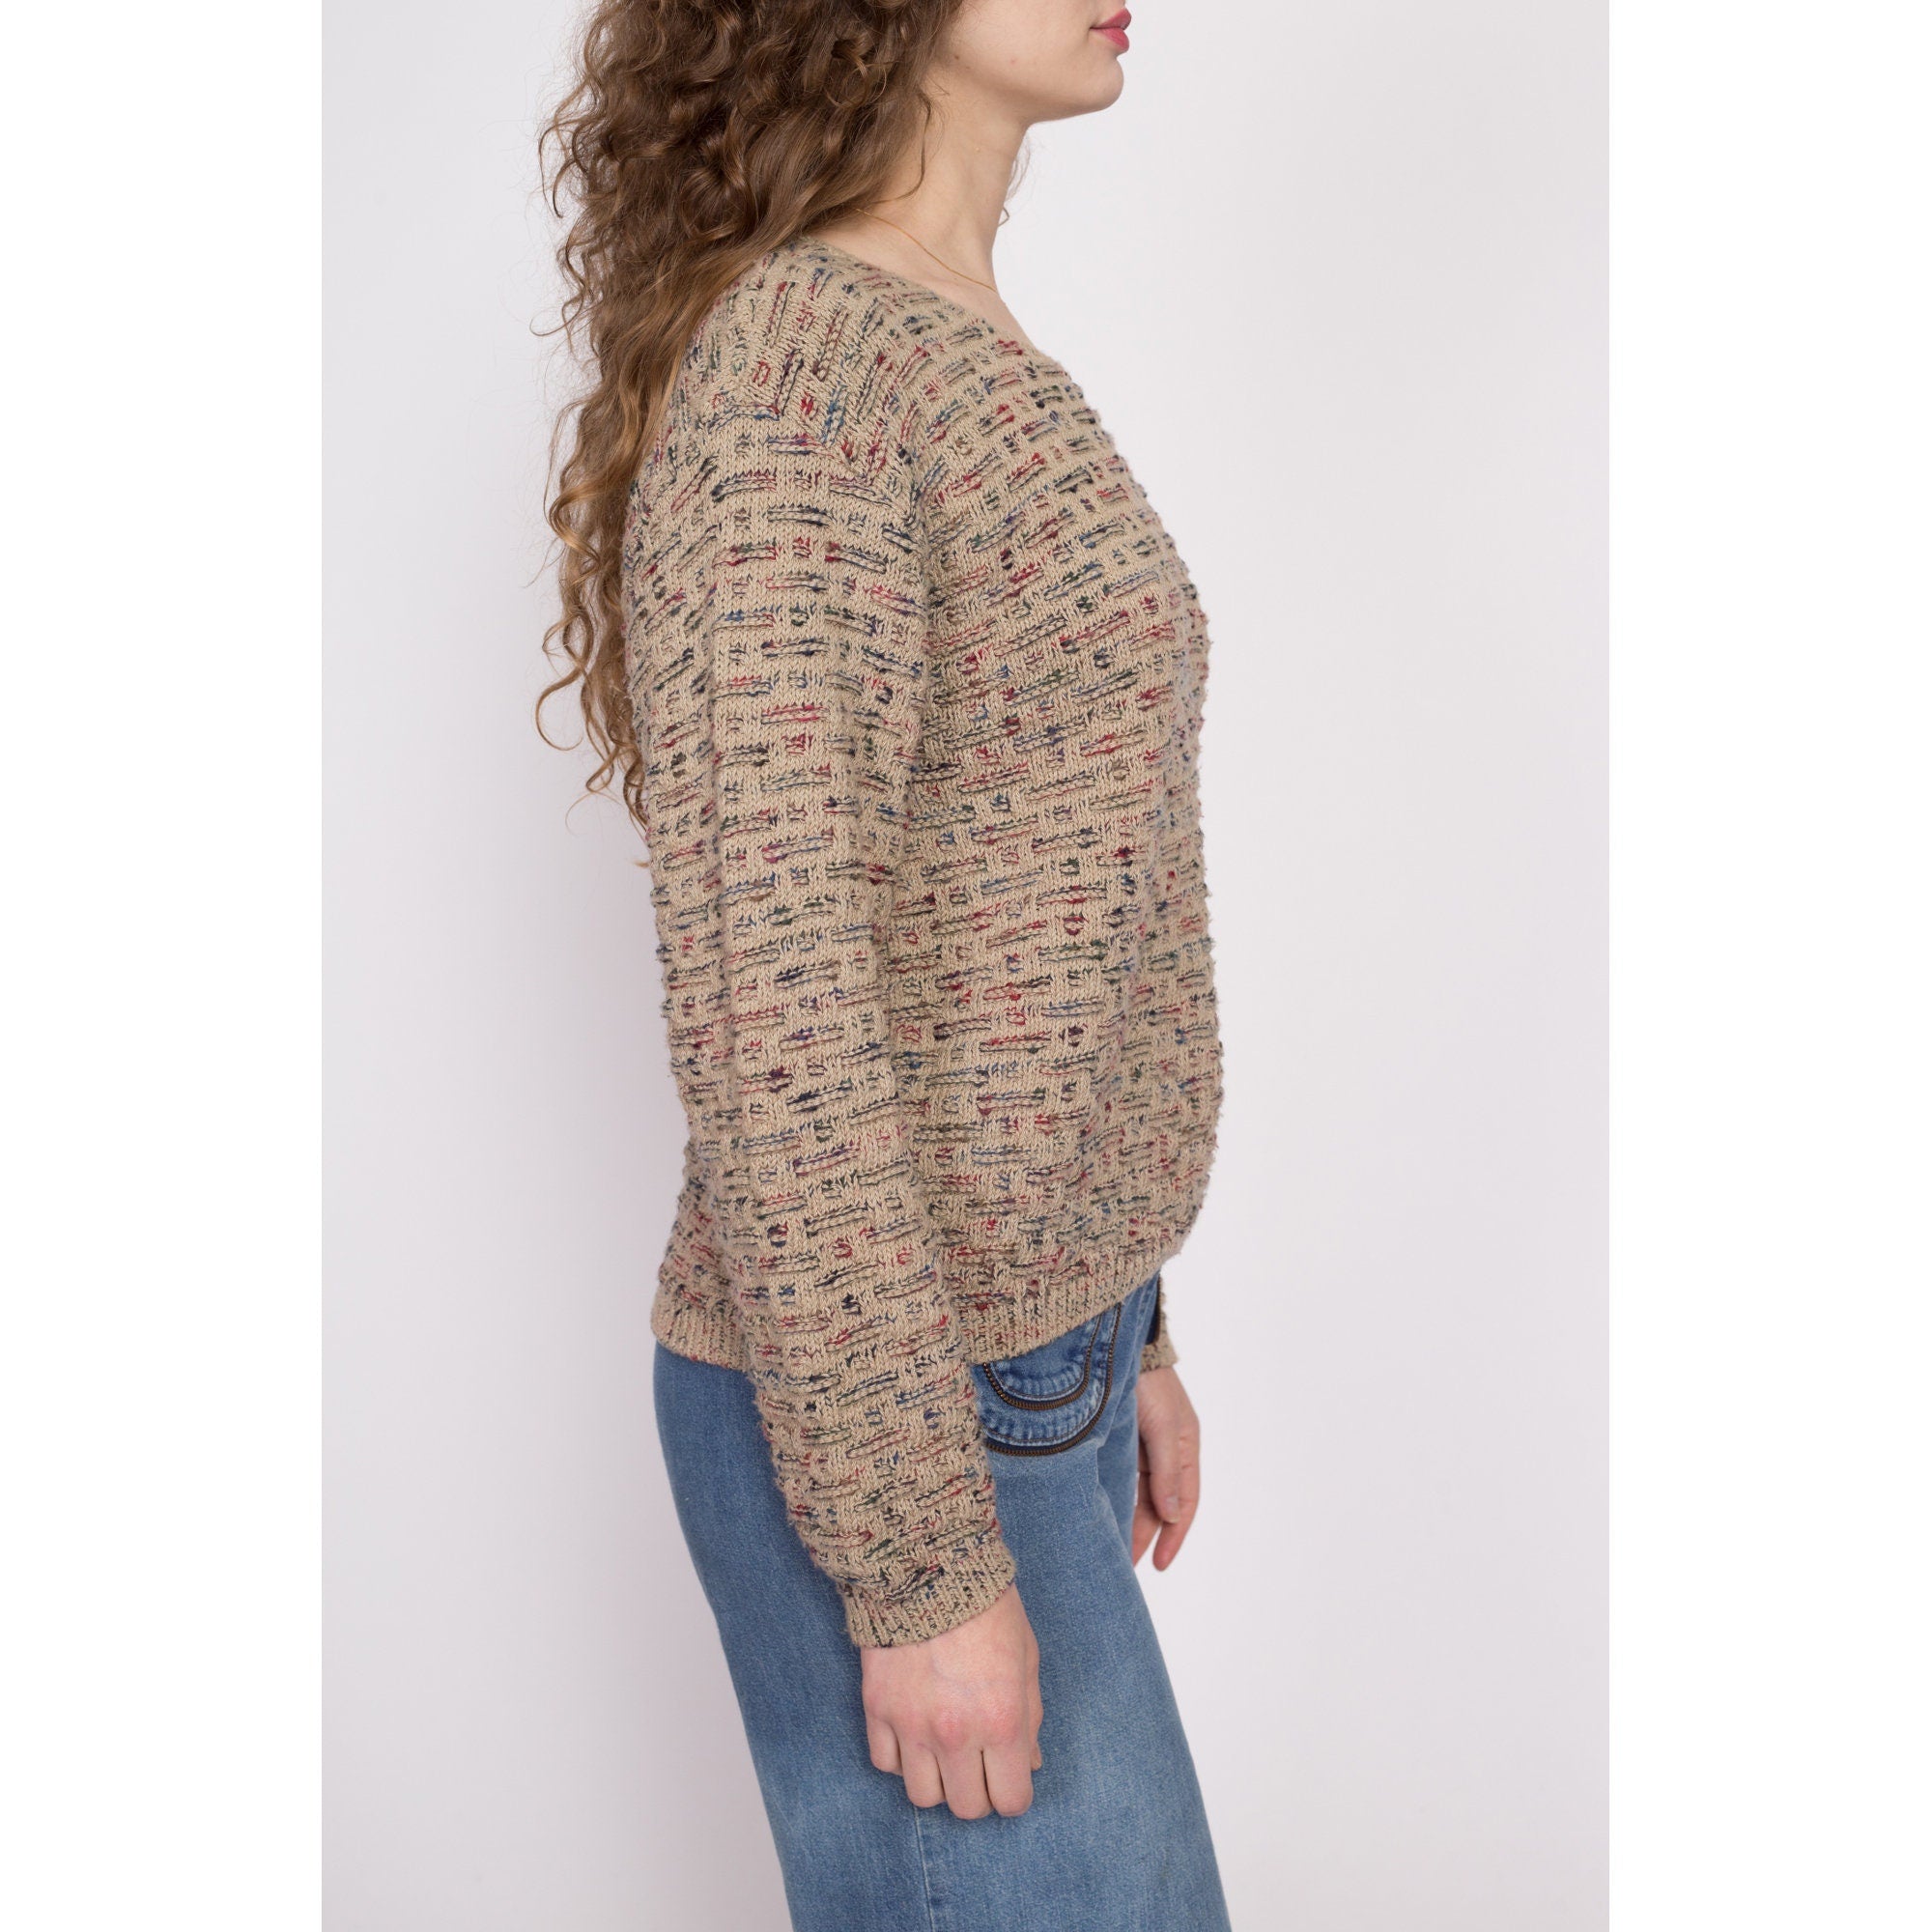 80s 90s Brown Patterned Knit Sweater - Medium – Flying Apple Vintage